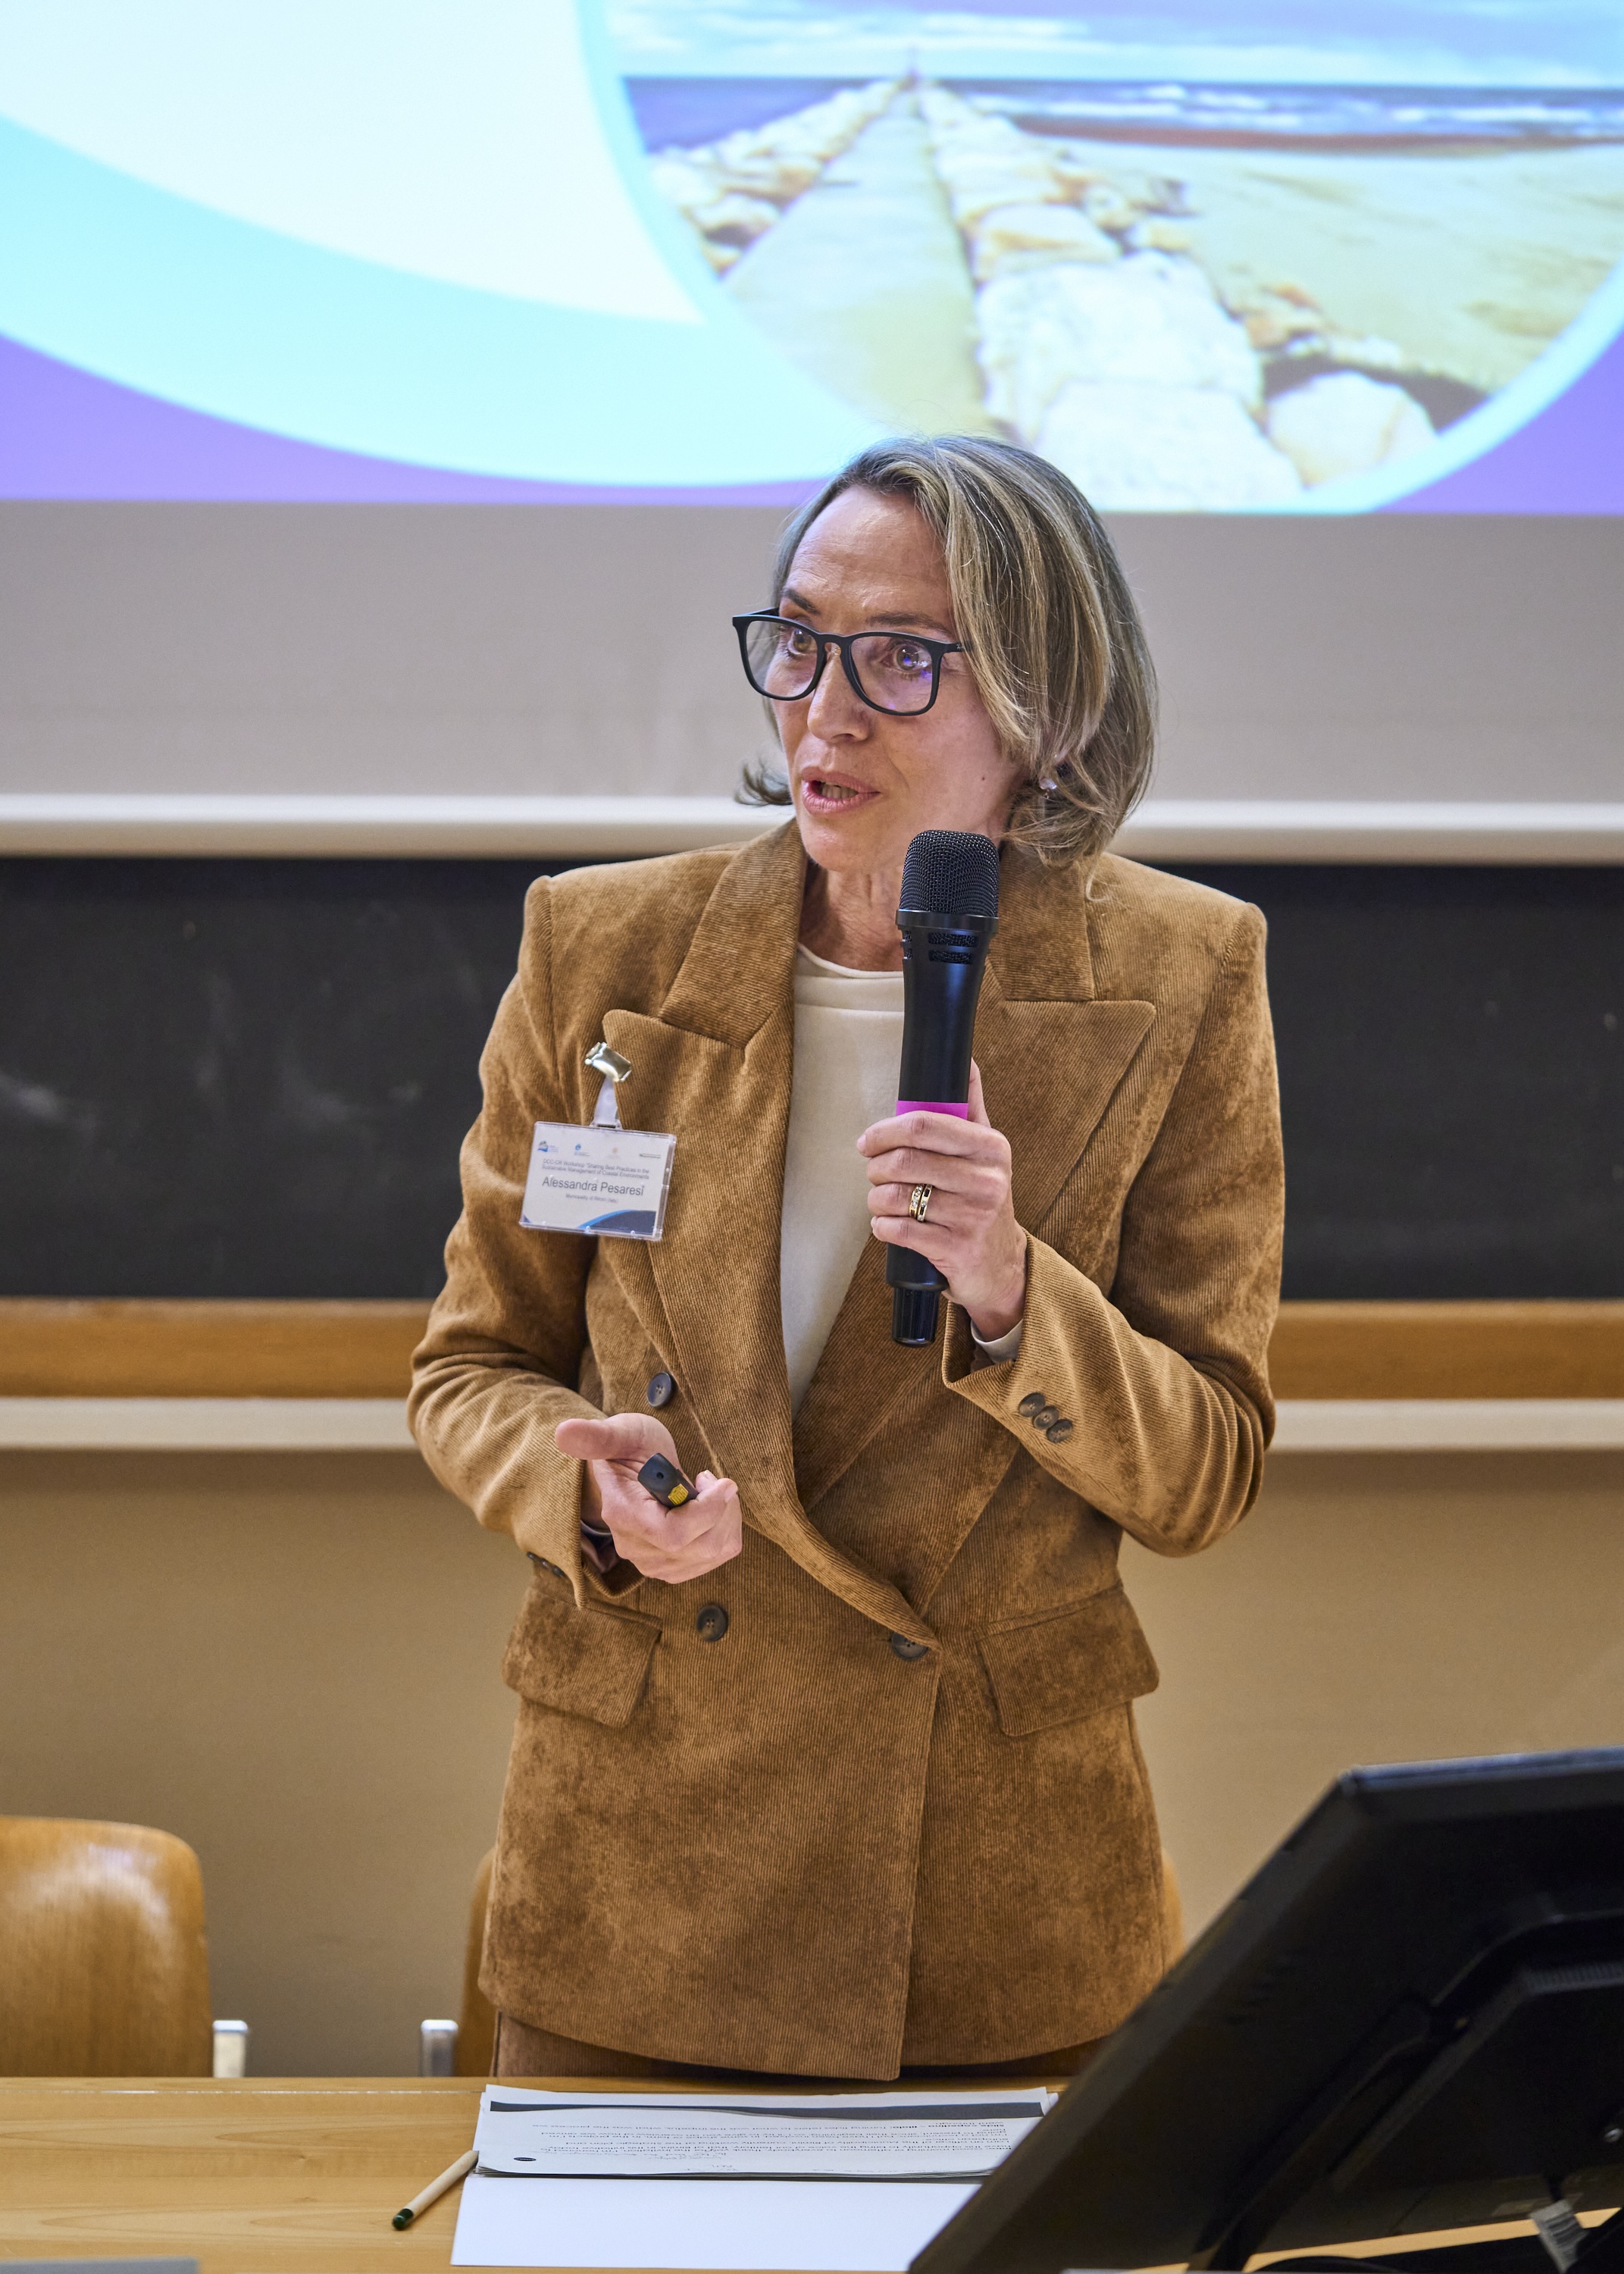 Alessandra Pesaresi presenting the Rimini case study